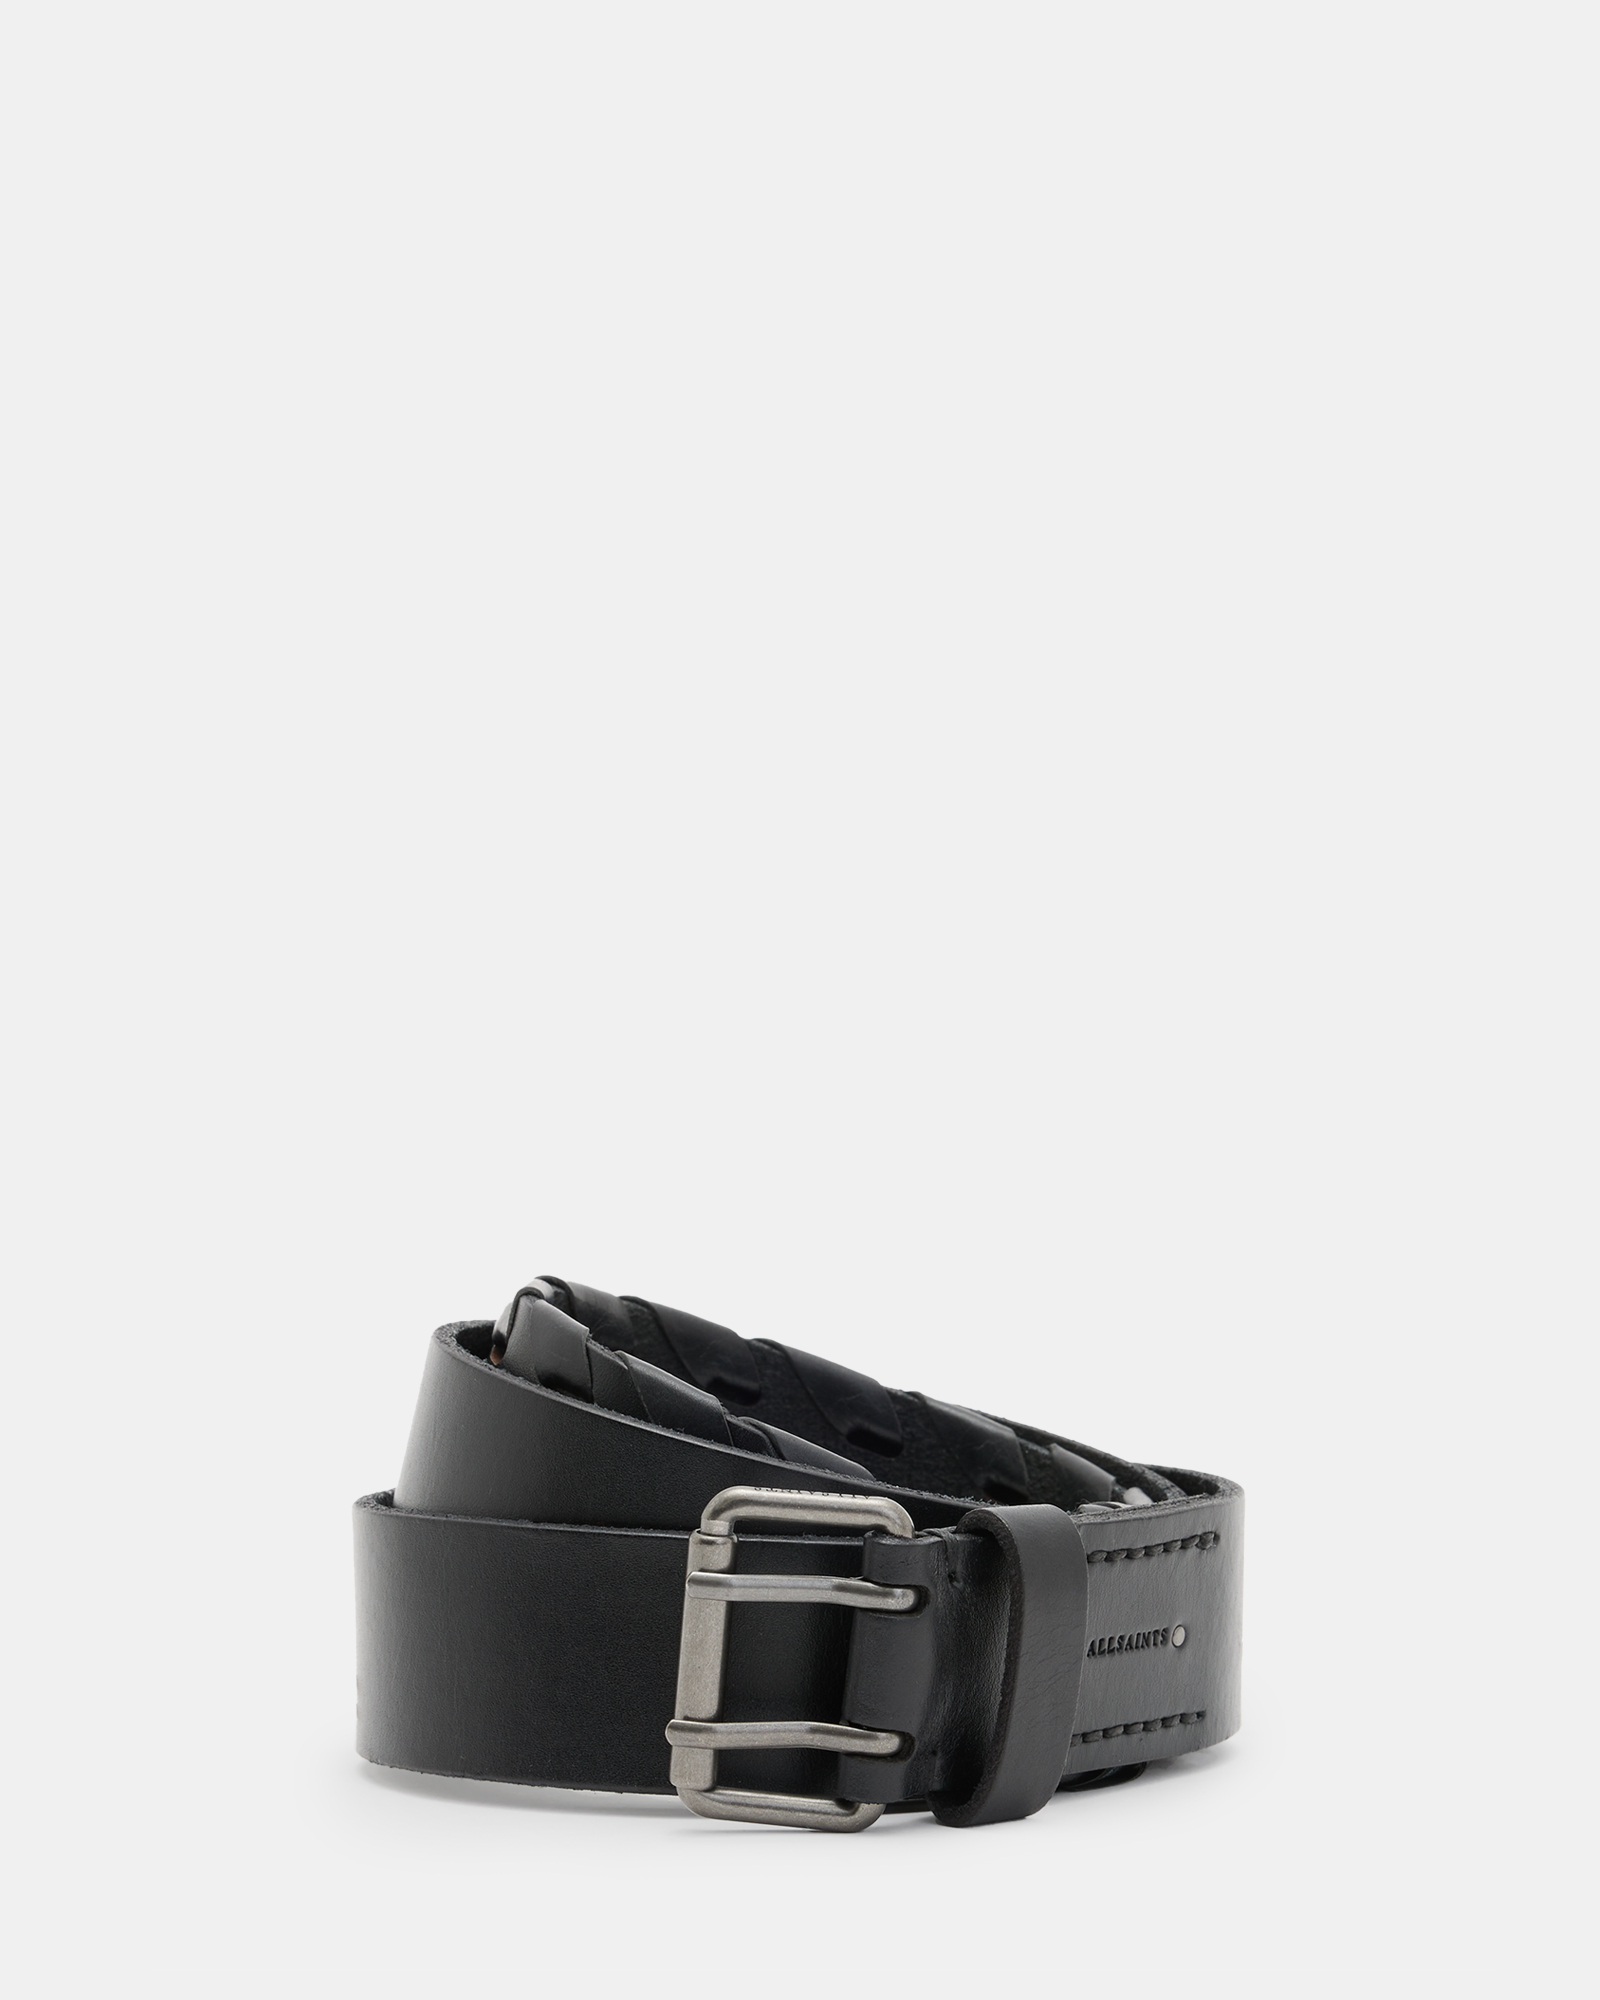 AllSaints Matt Leather Woven Belt,, Black/Gunmetal